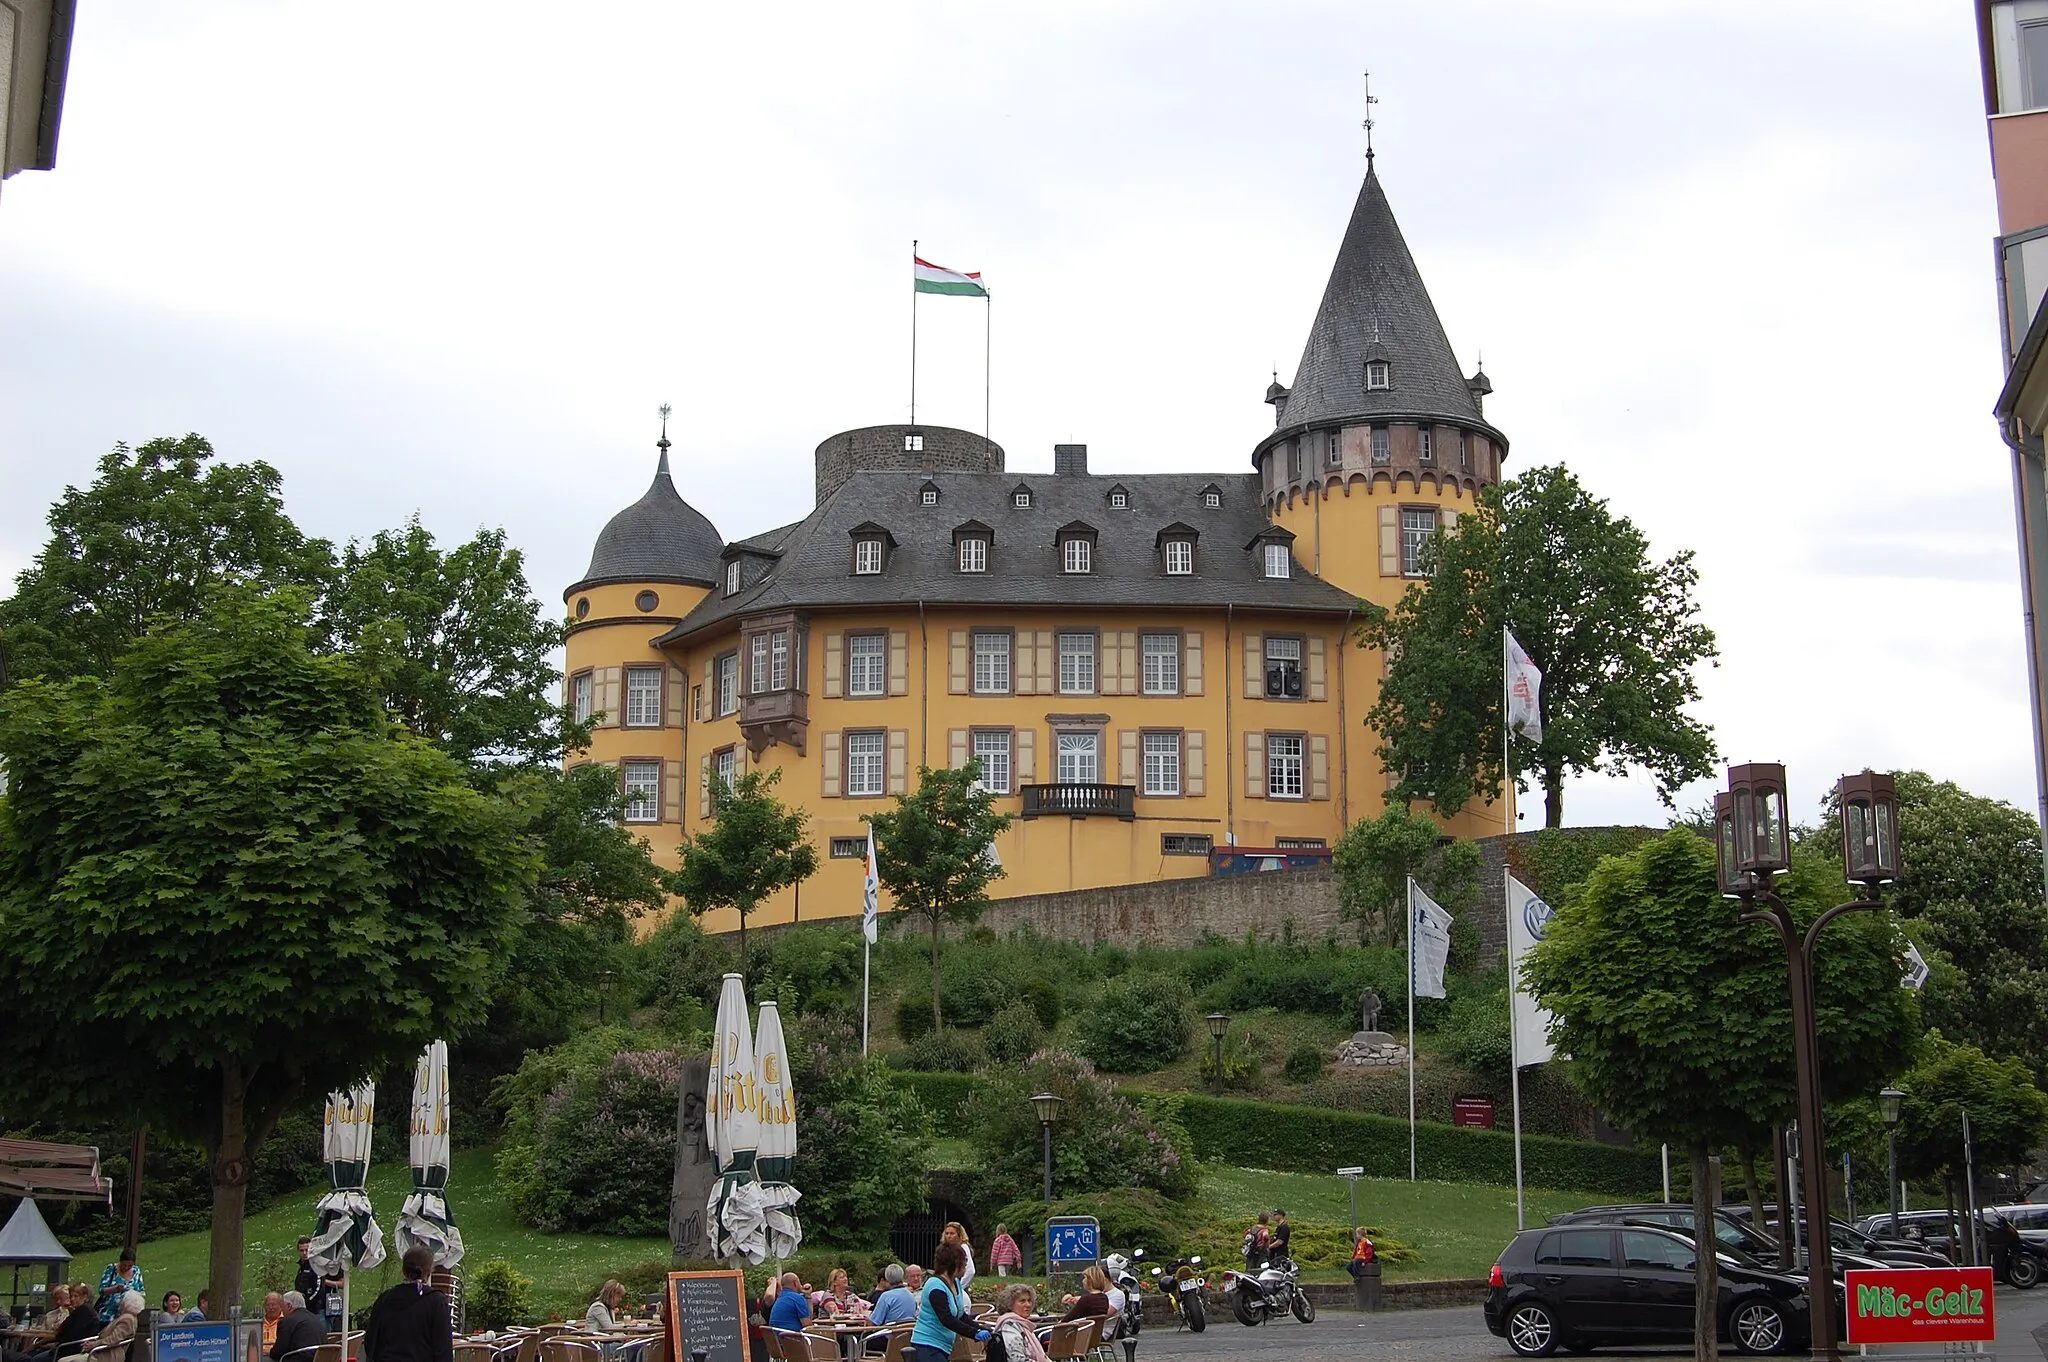 Photo showing: The Genoveva castle in Mayen.